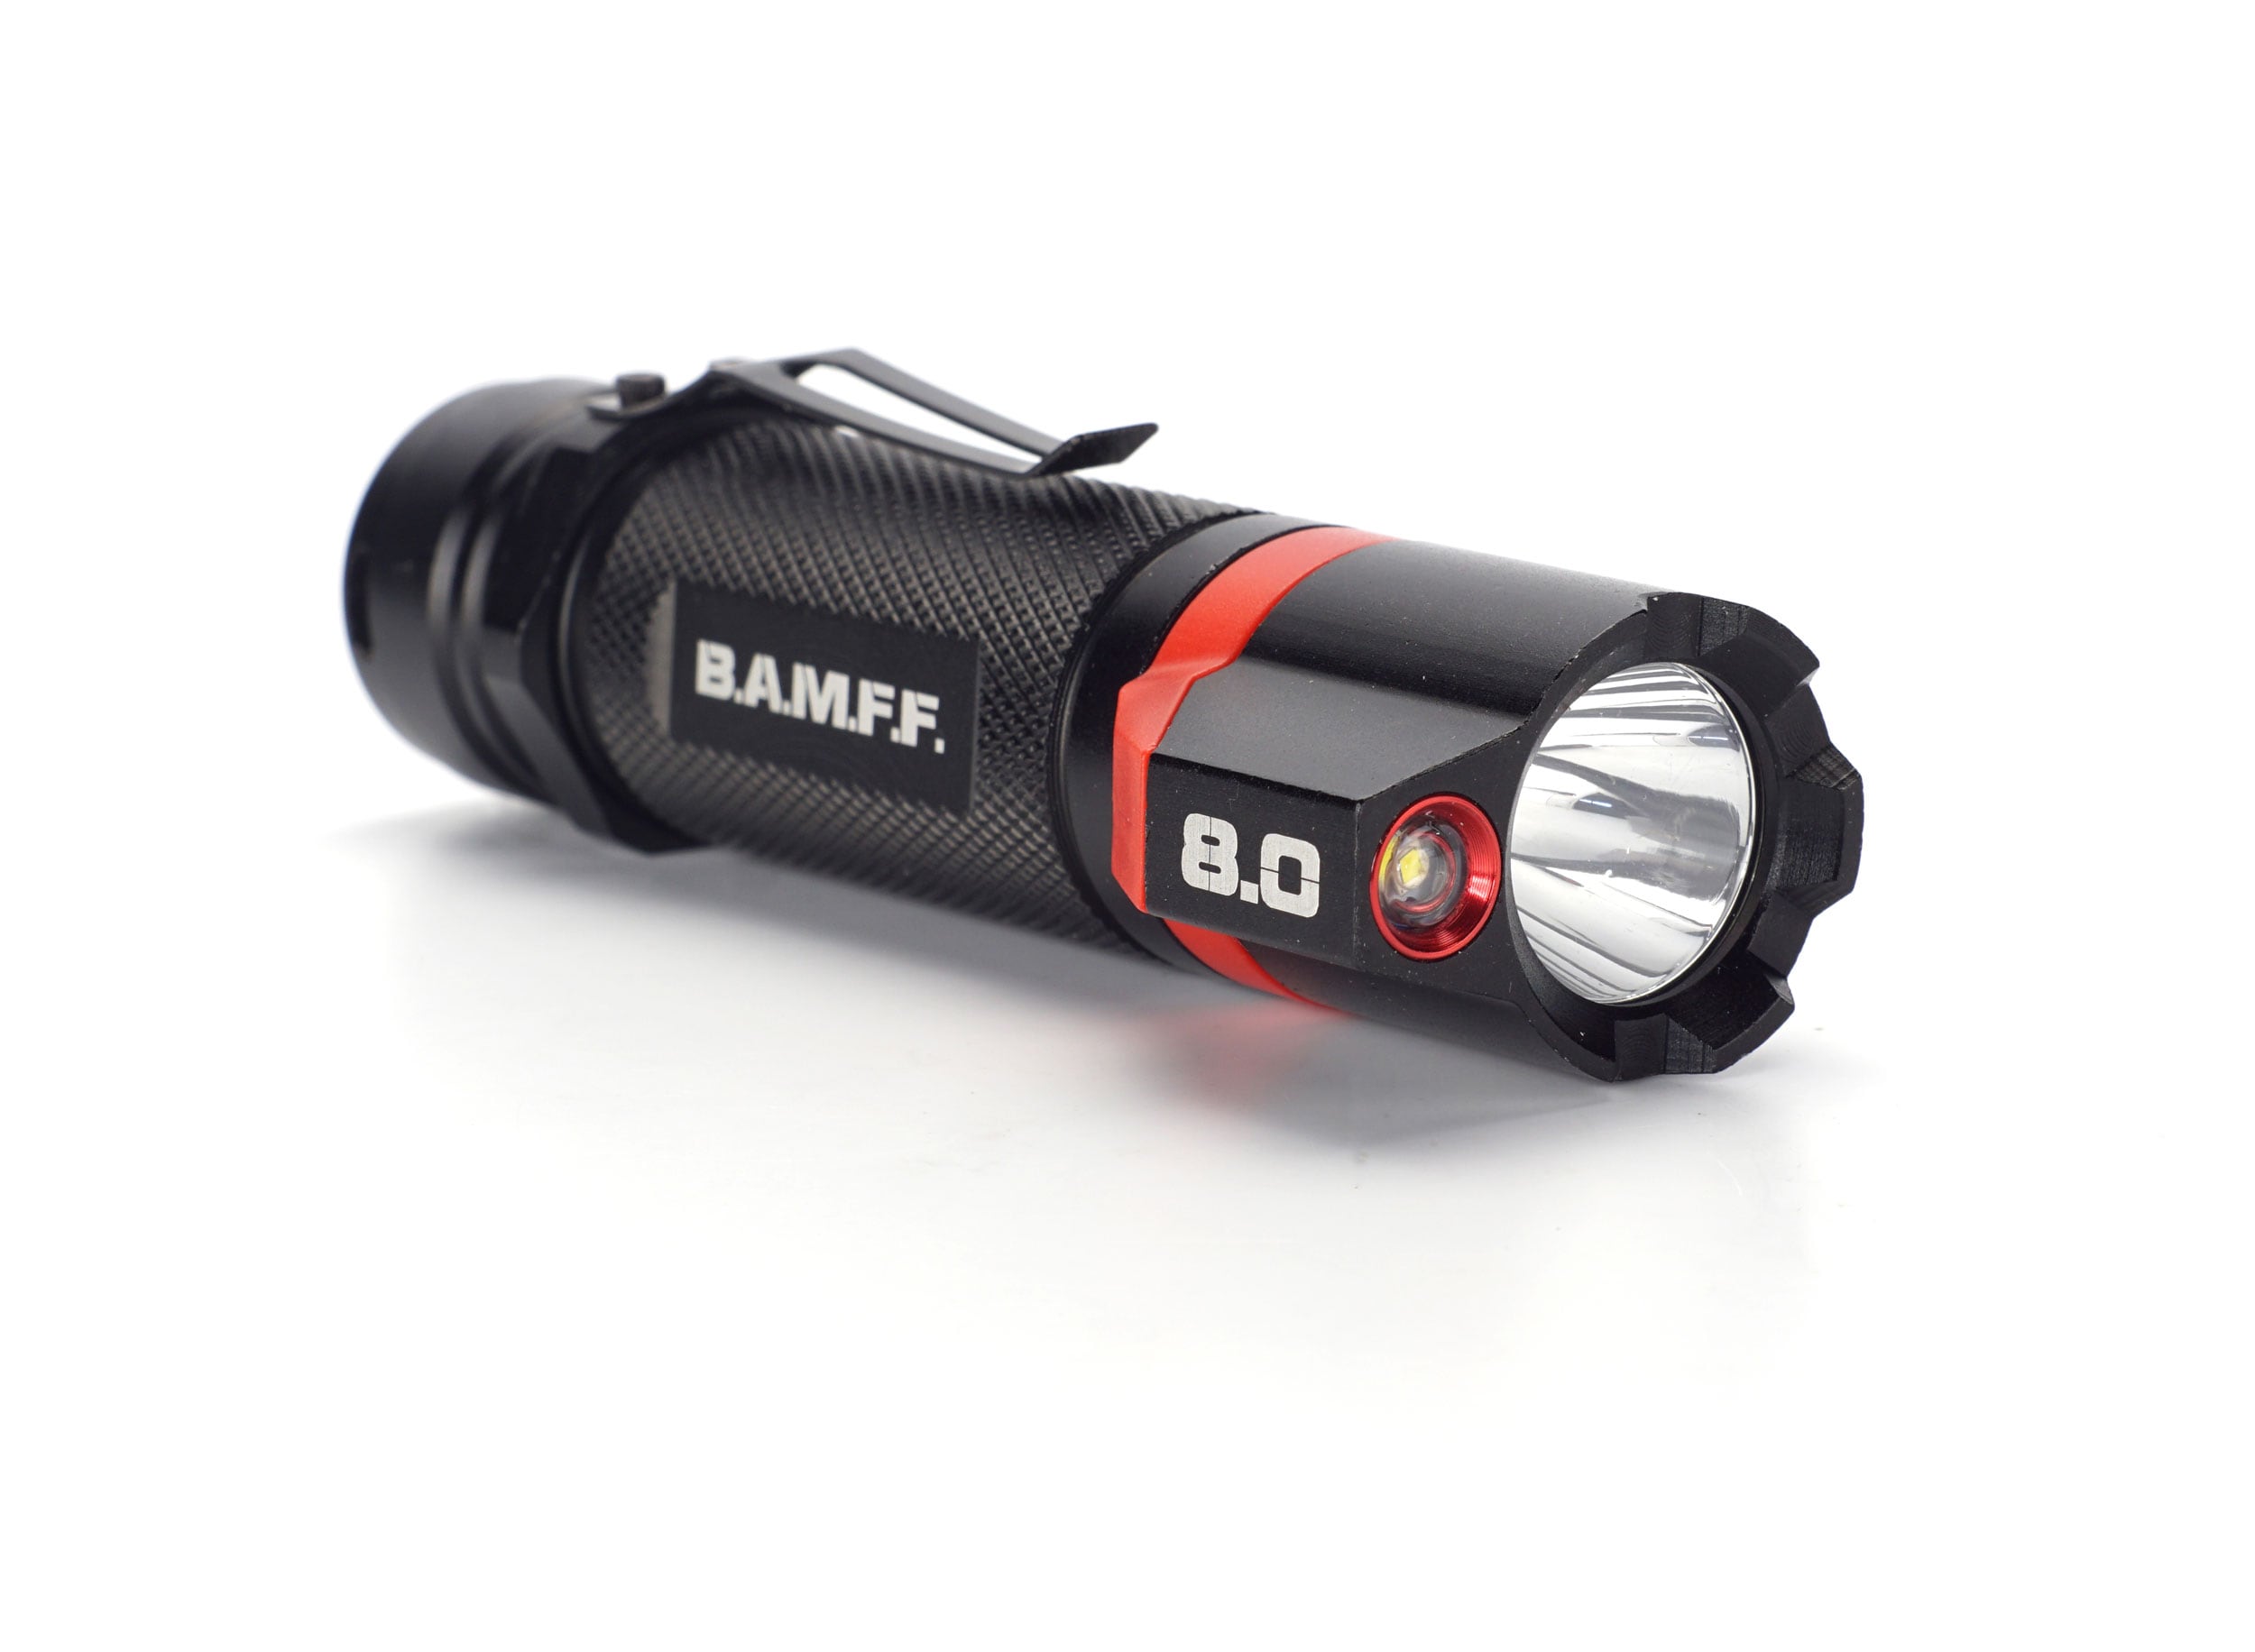 Stkr BAMFF 8.0 Dual-LED Flashlight